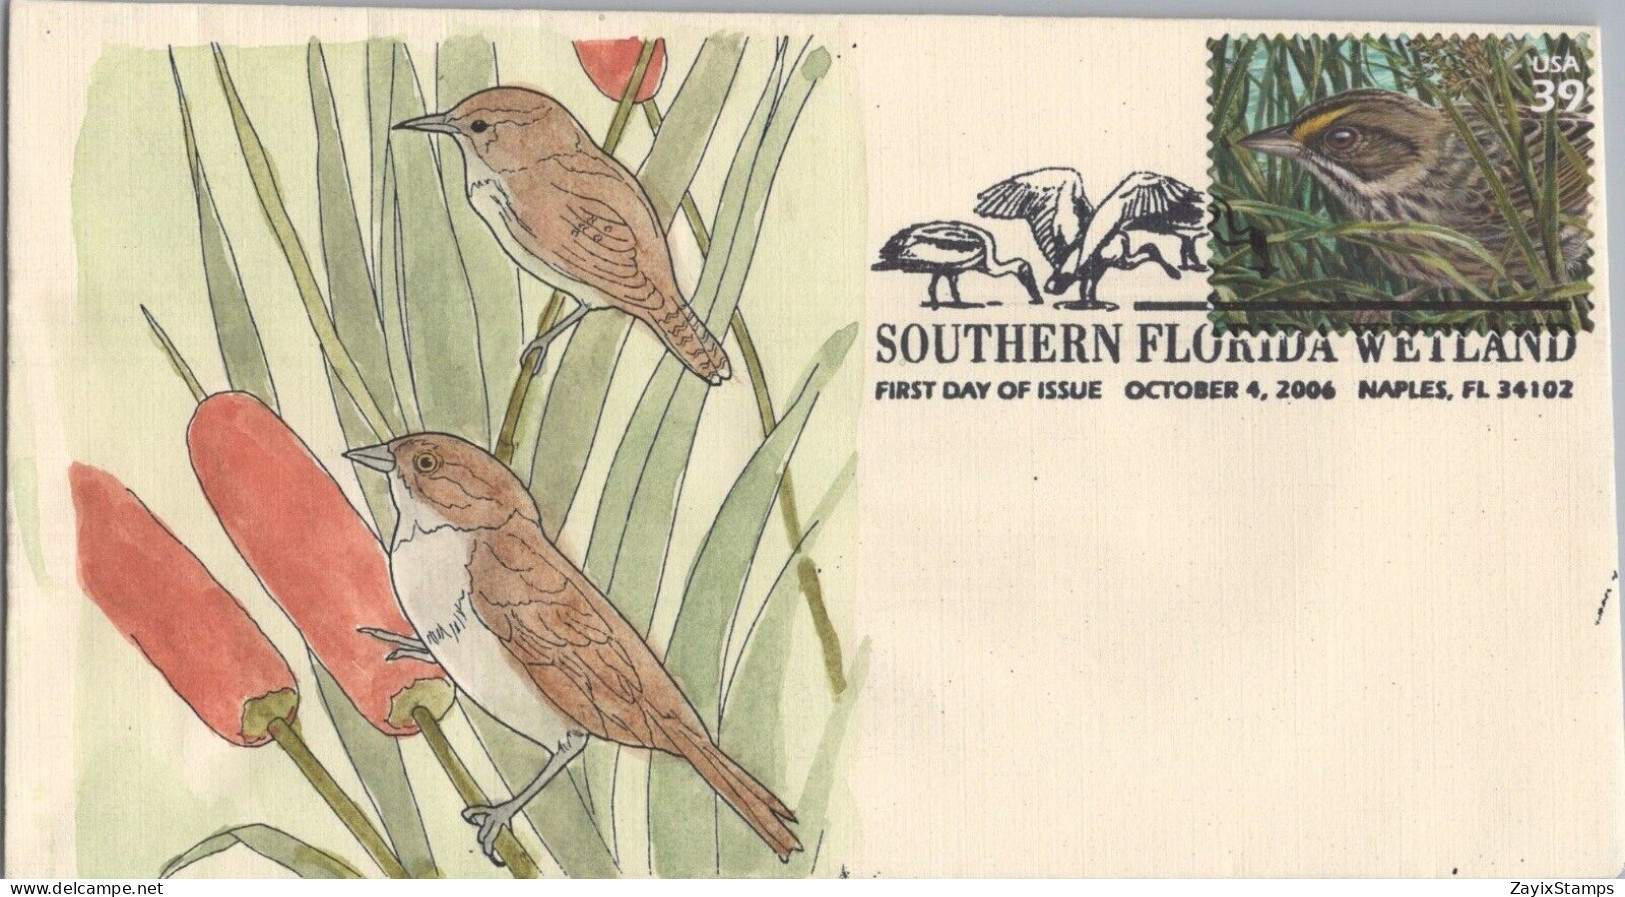 ZAYIX US 4099 SMB Cachets 10 hand-colored FDC Florida Wetlands birds 120622SM23